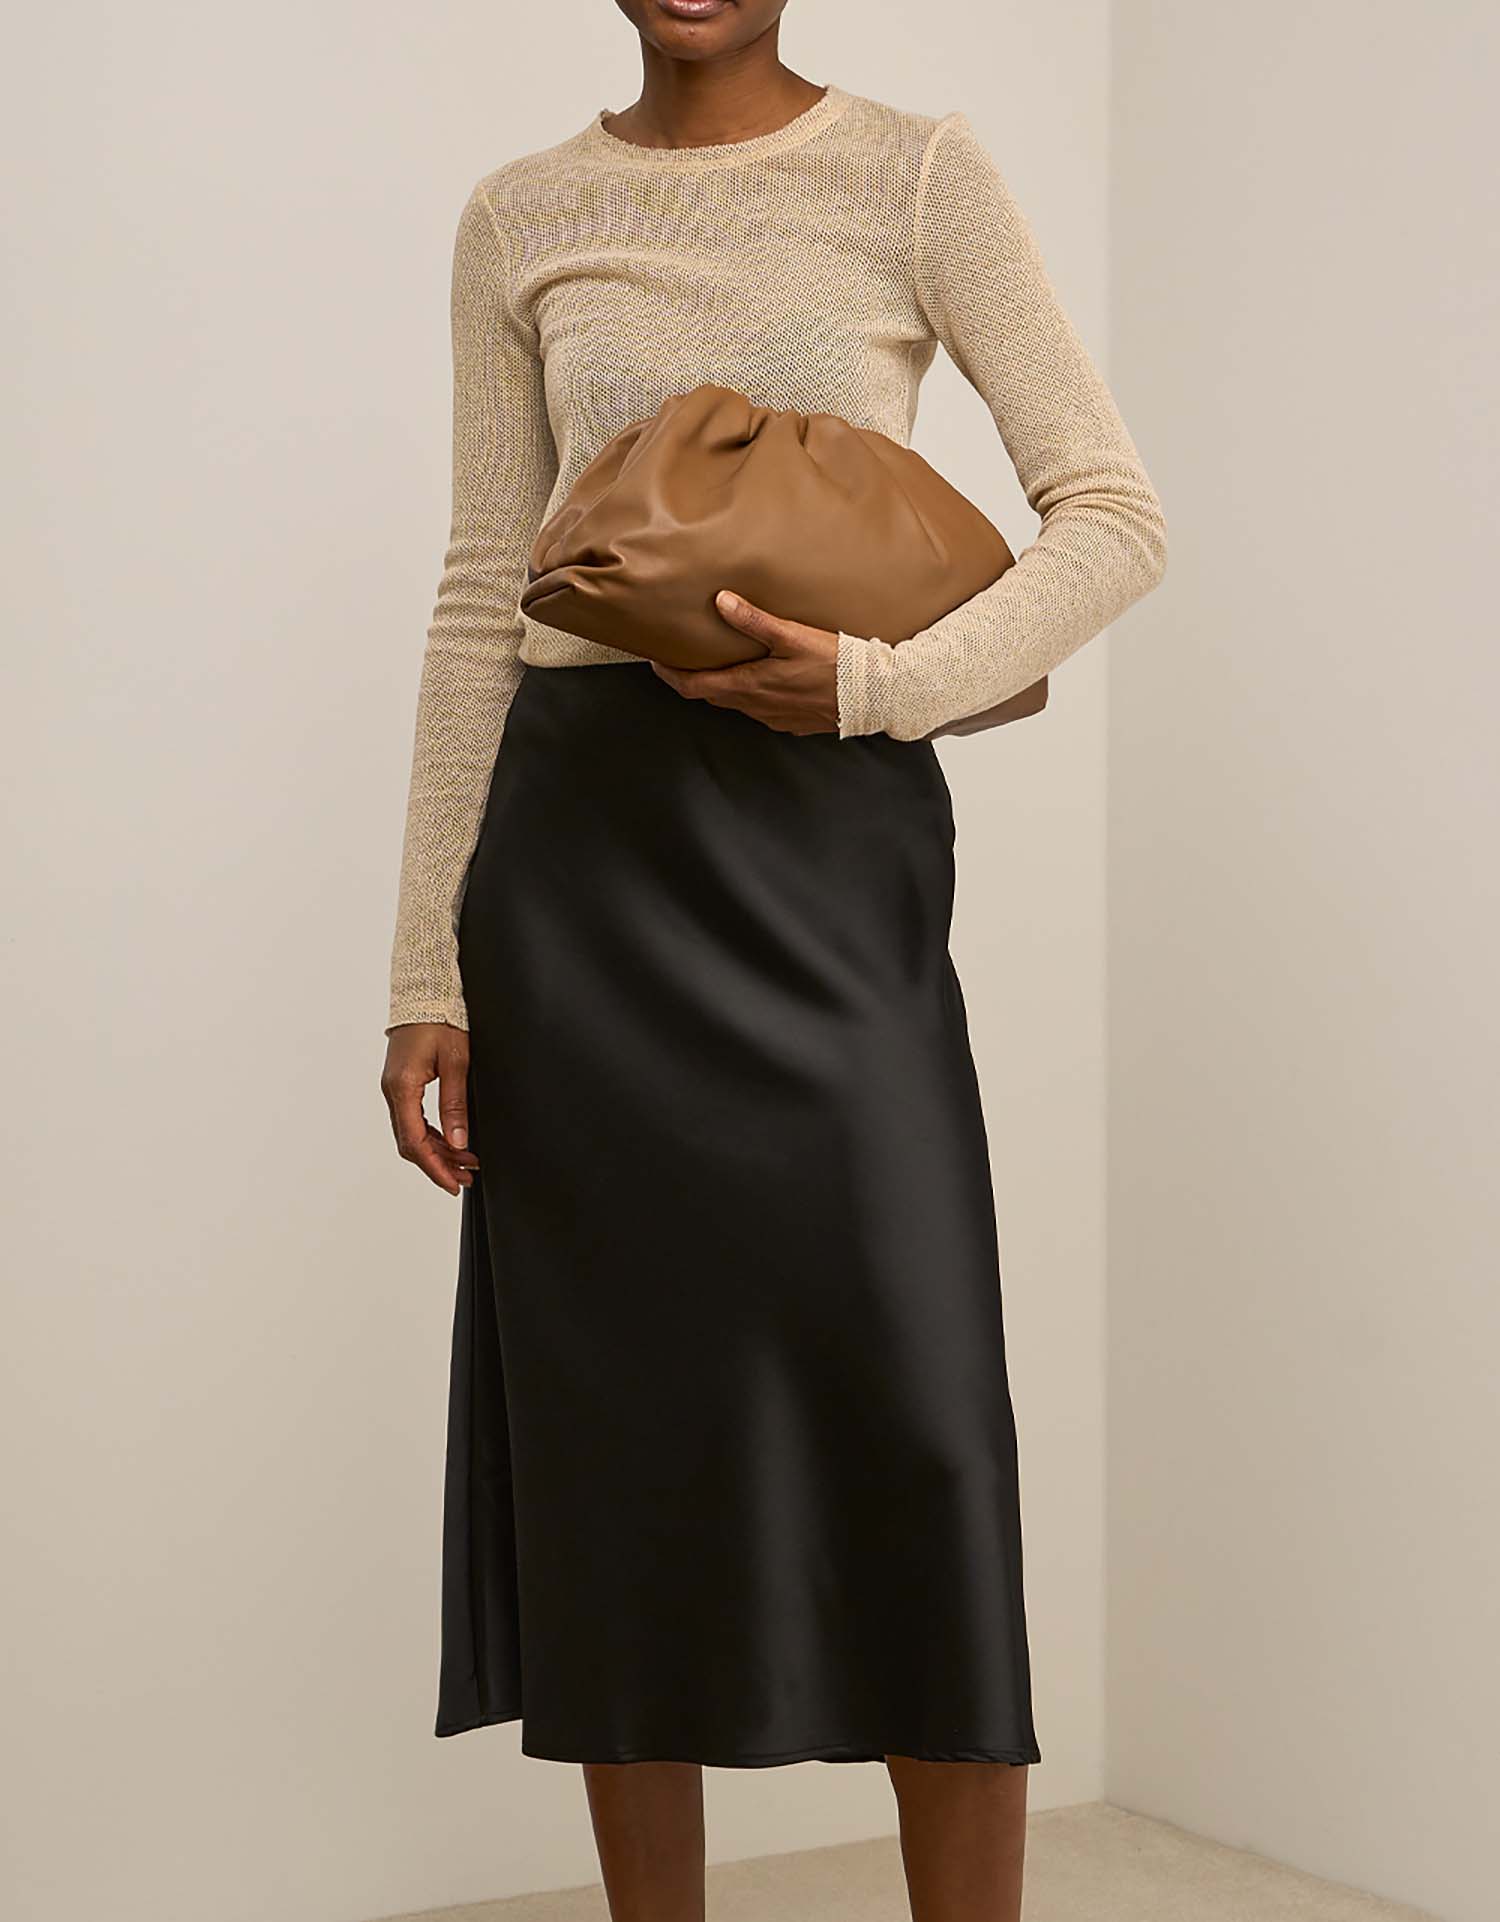 BottegaVeneta Pouch One-size Teak on Model | Sell your designer bag on Saclab.com